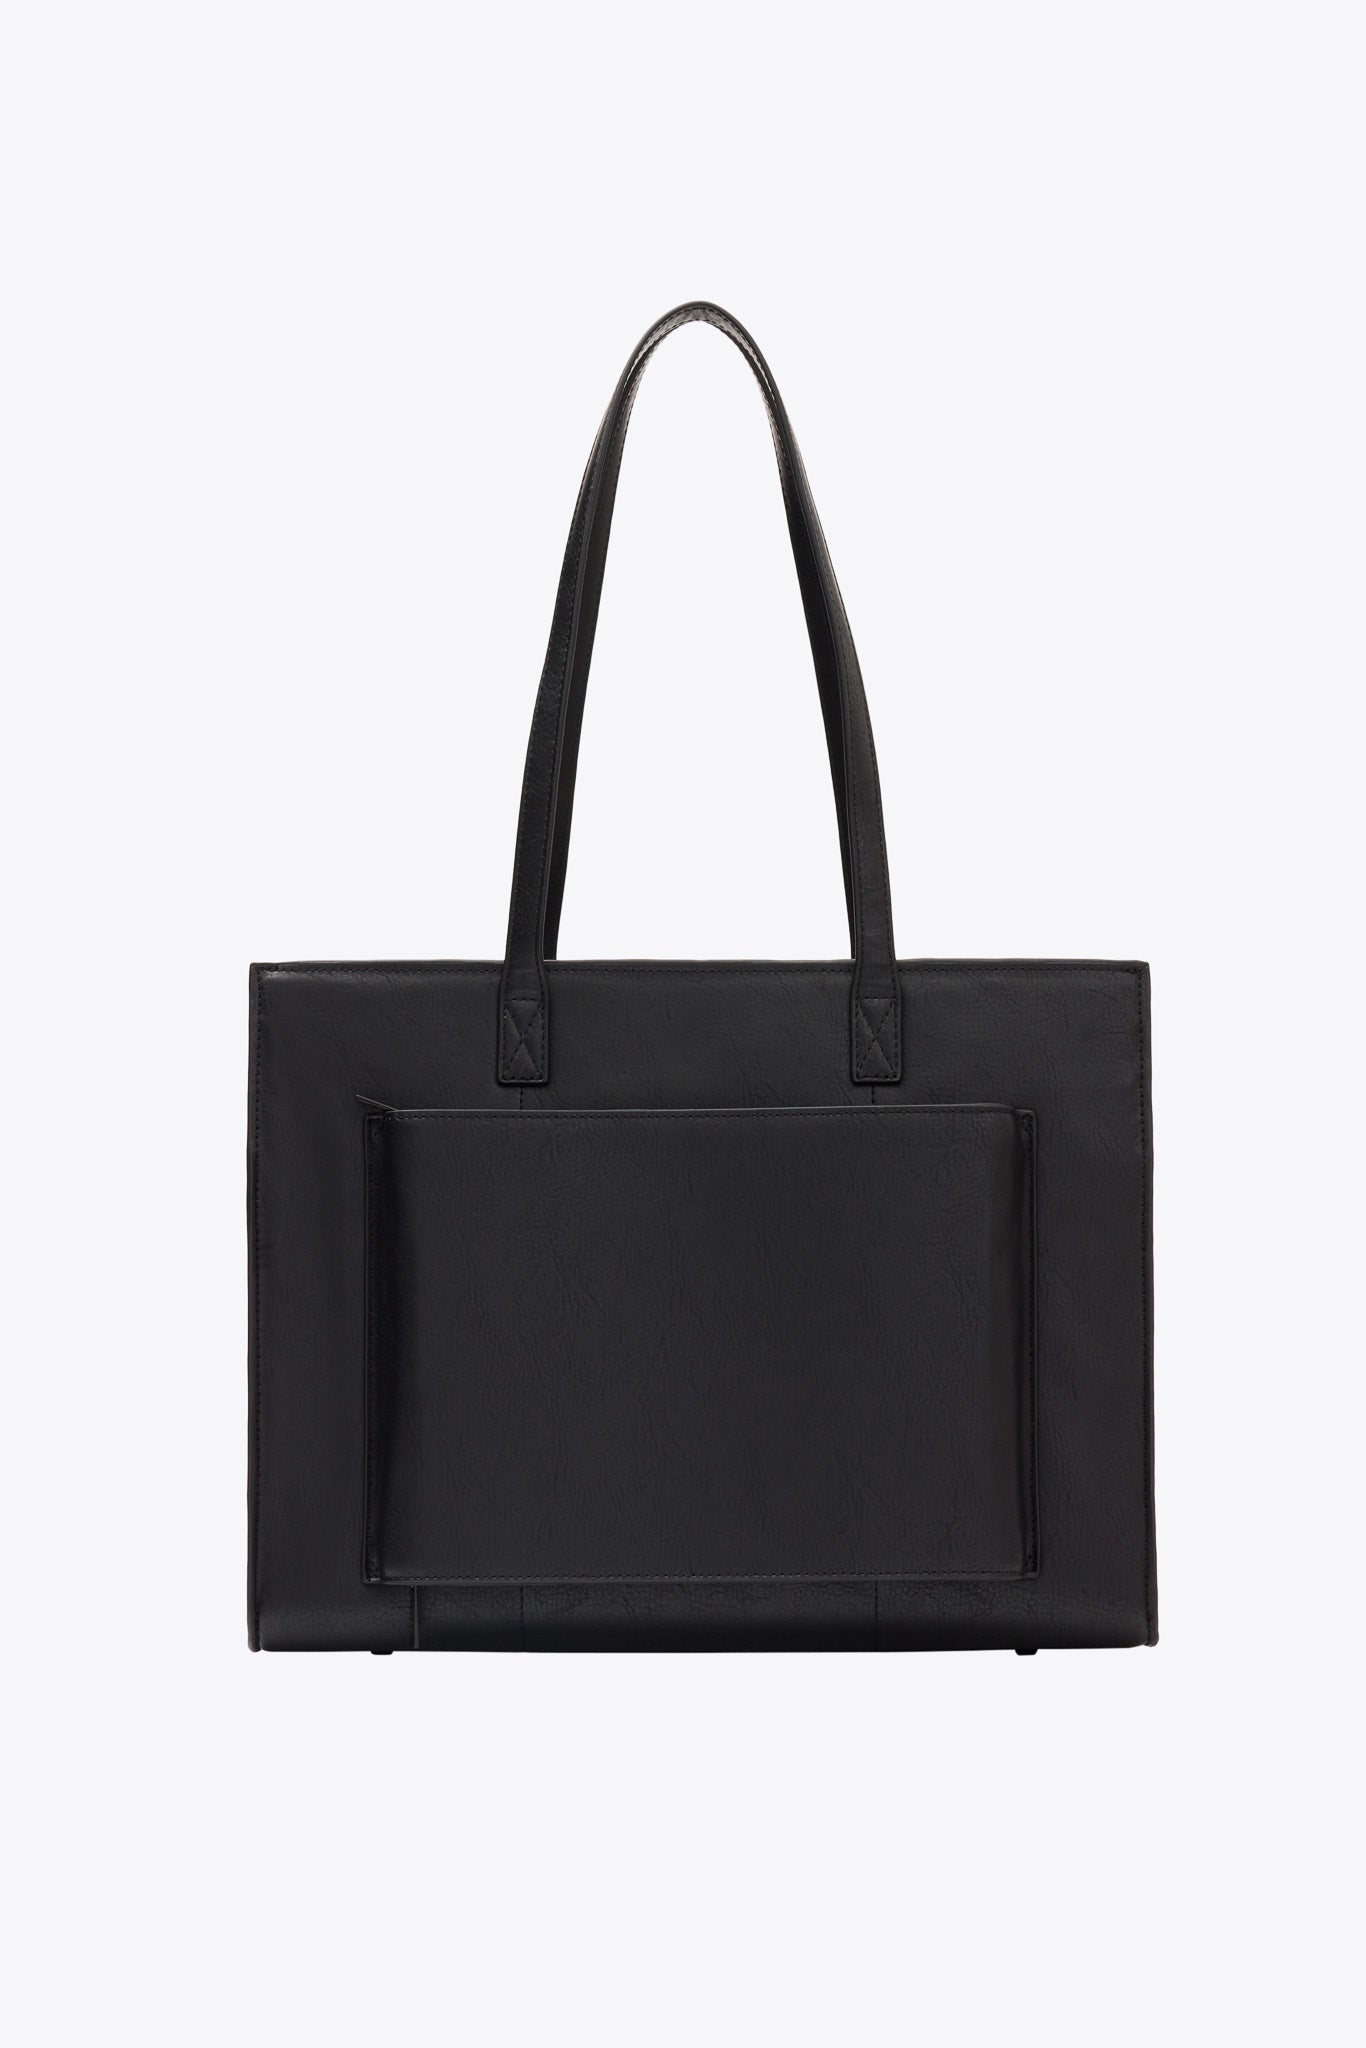 BÉIS 'The Work Tote' in Black - Work Bag For Women & Laptop Tote Bag ...